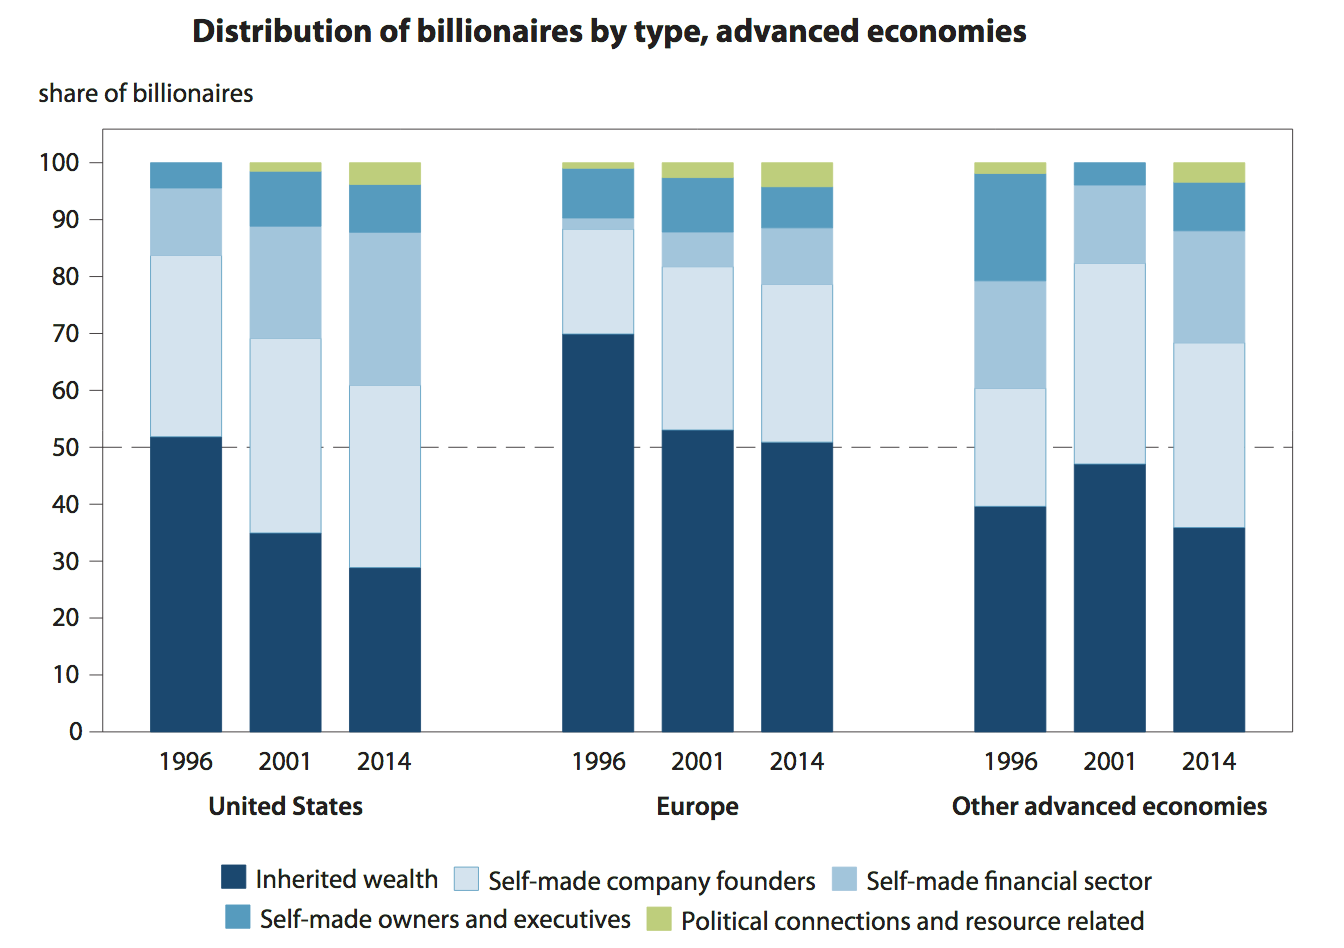 Source of Wealth Among Billionaires (Wealth)